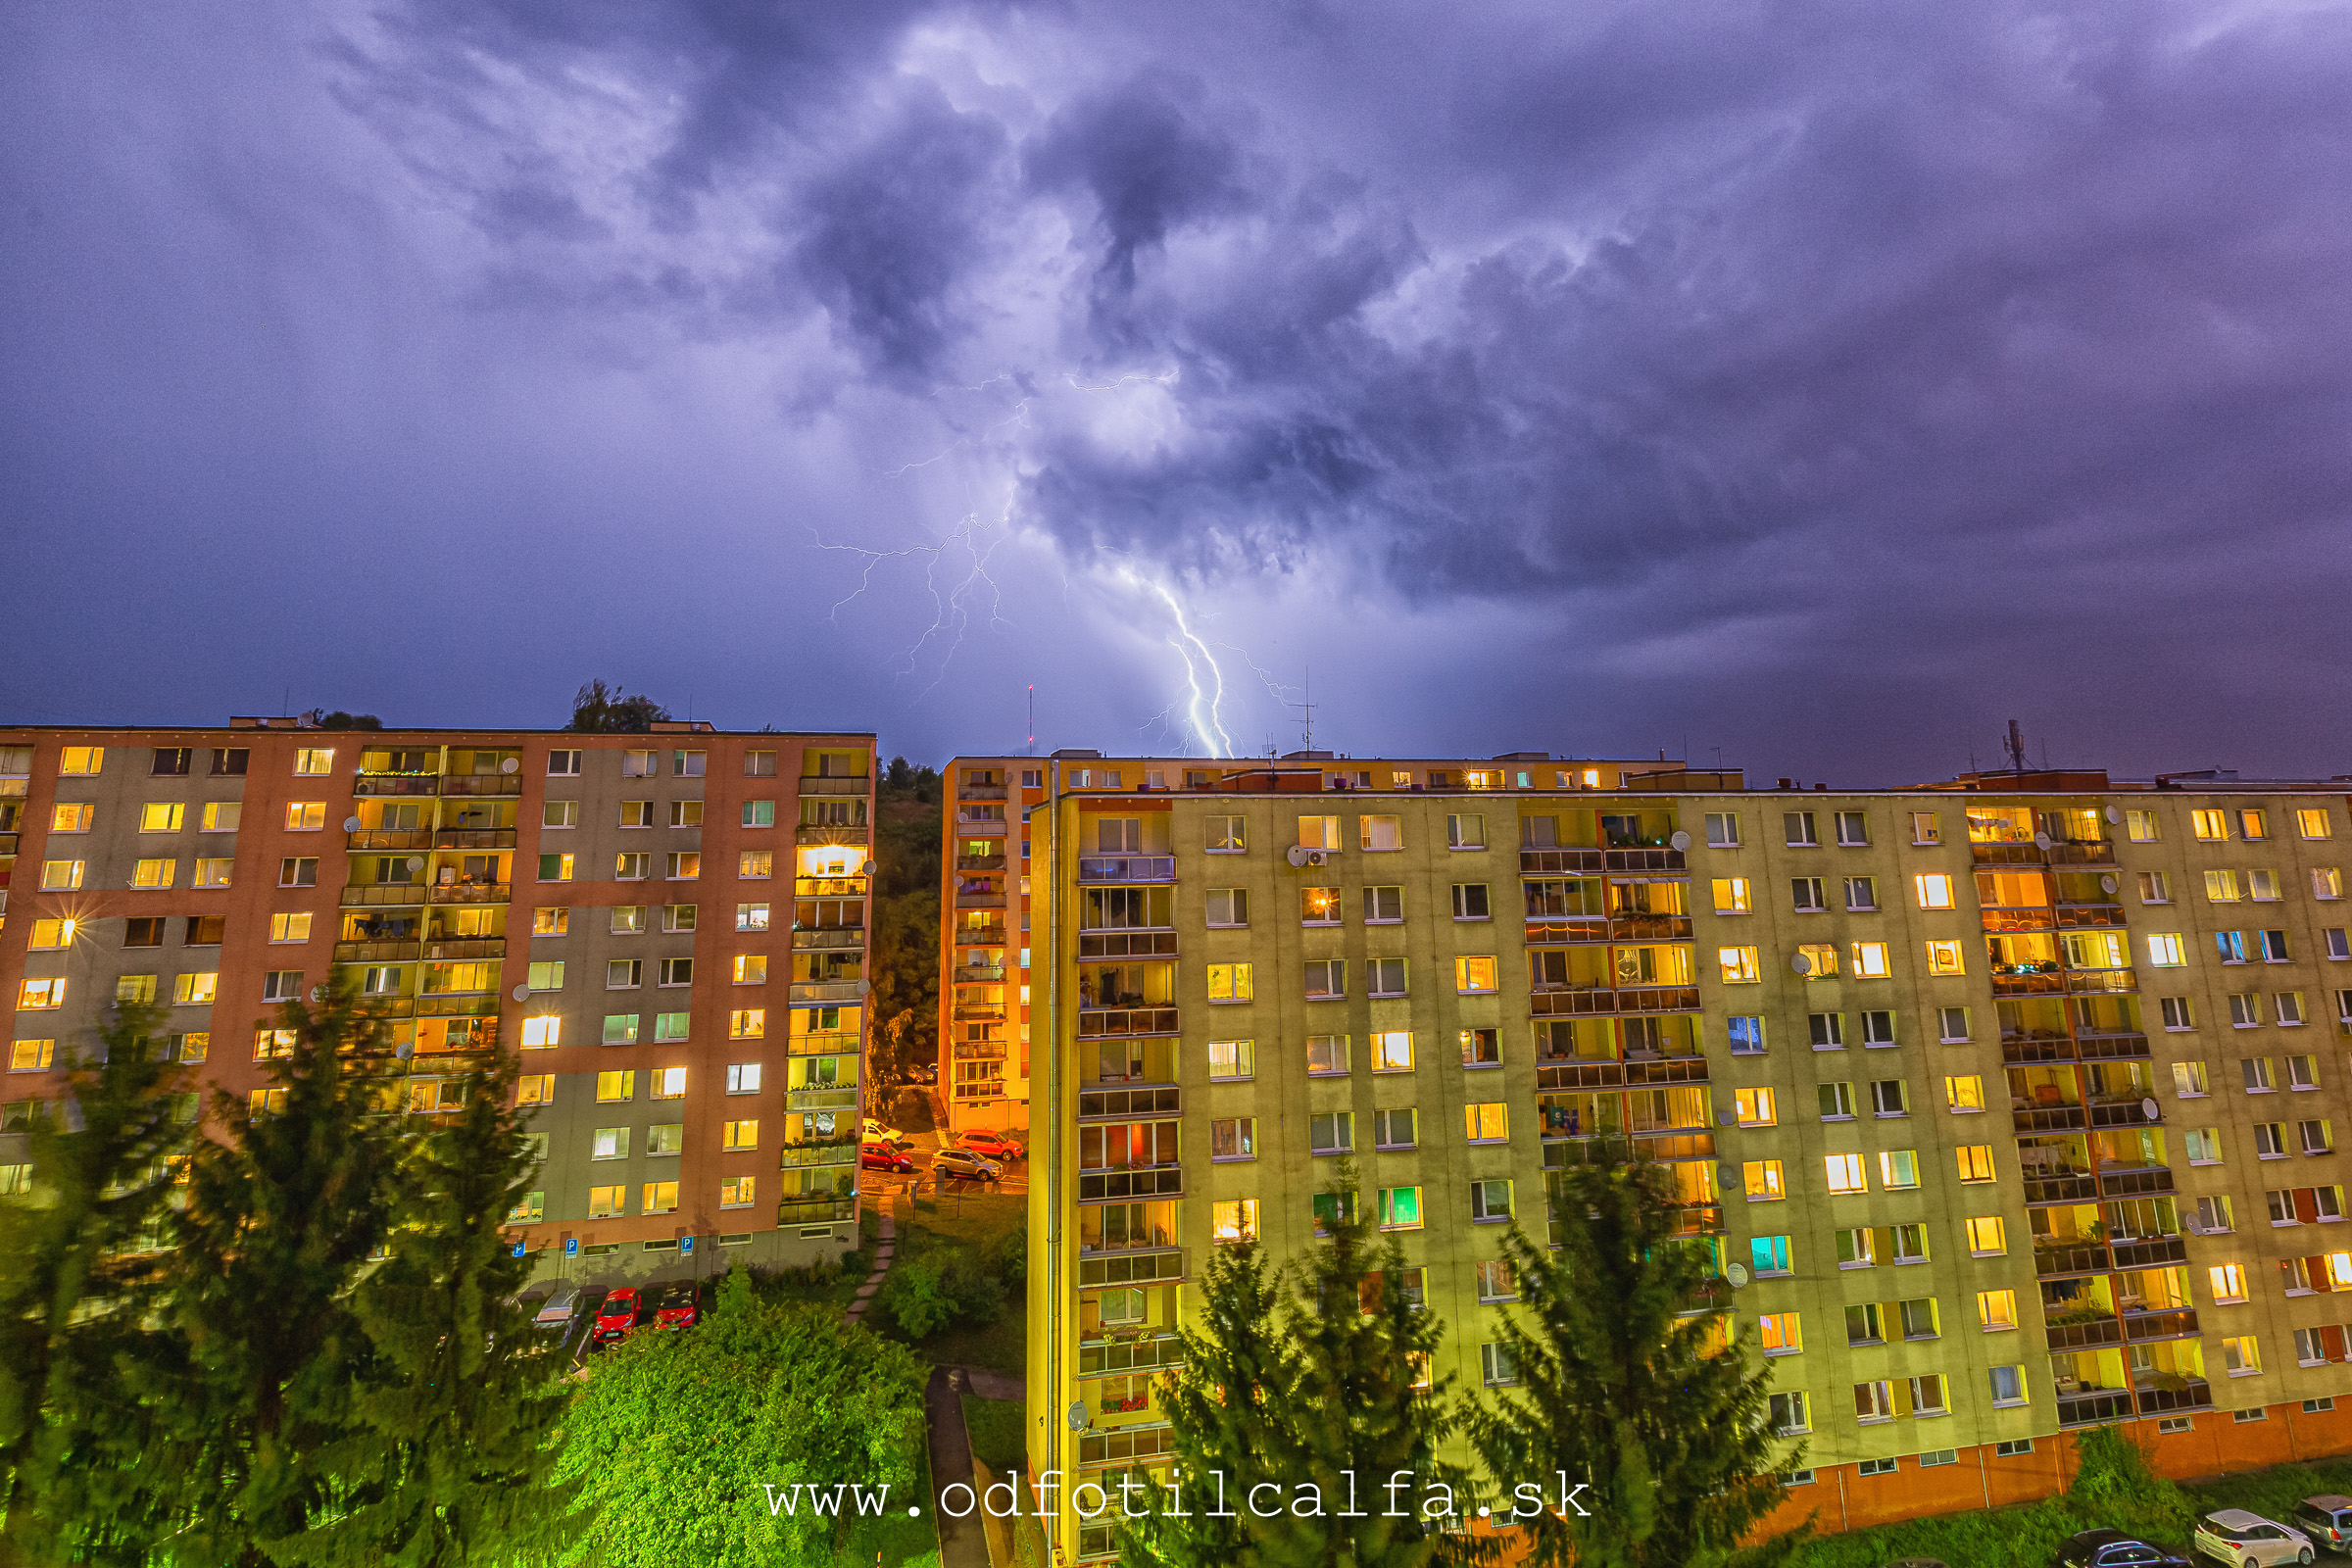 storm brka slovensko dankov stoziar blesky lightning-6JPG